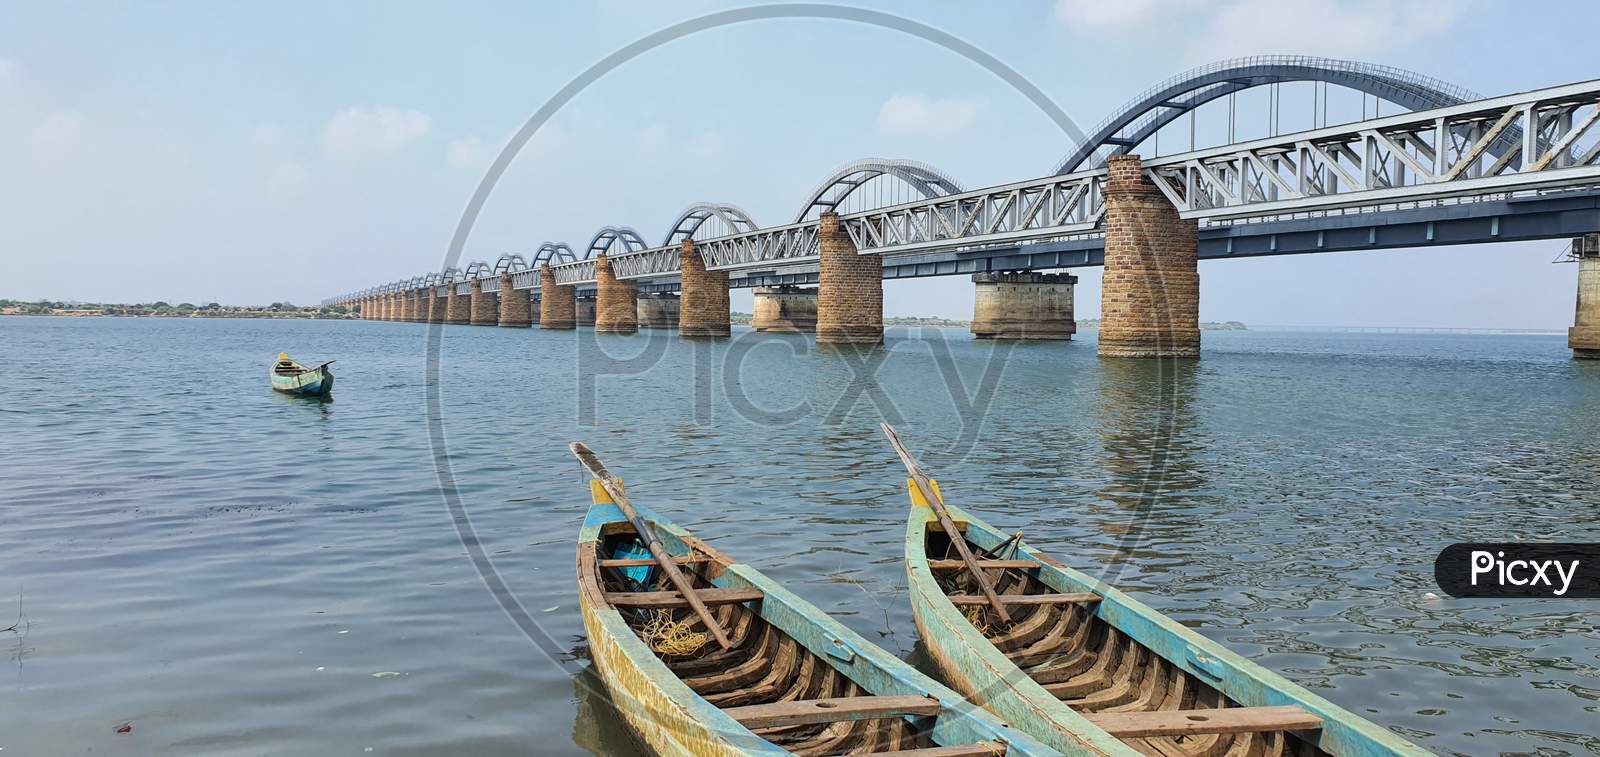 Boats against the backdrop of railway bridges across the Godavari river